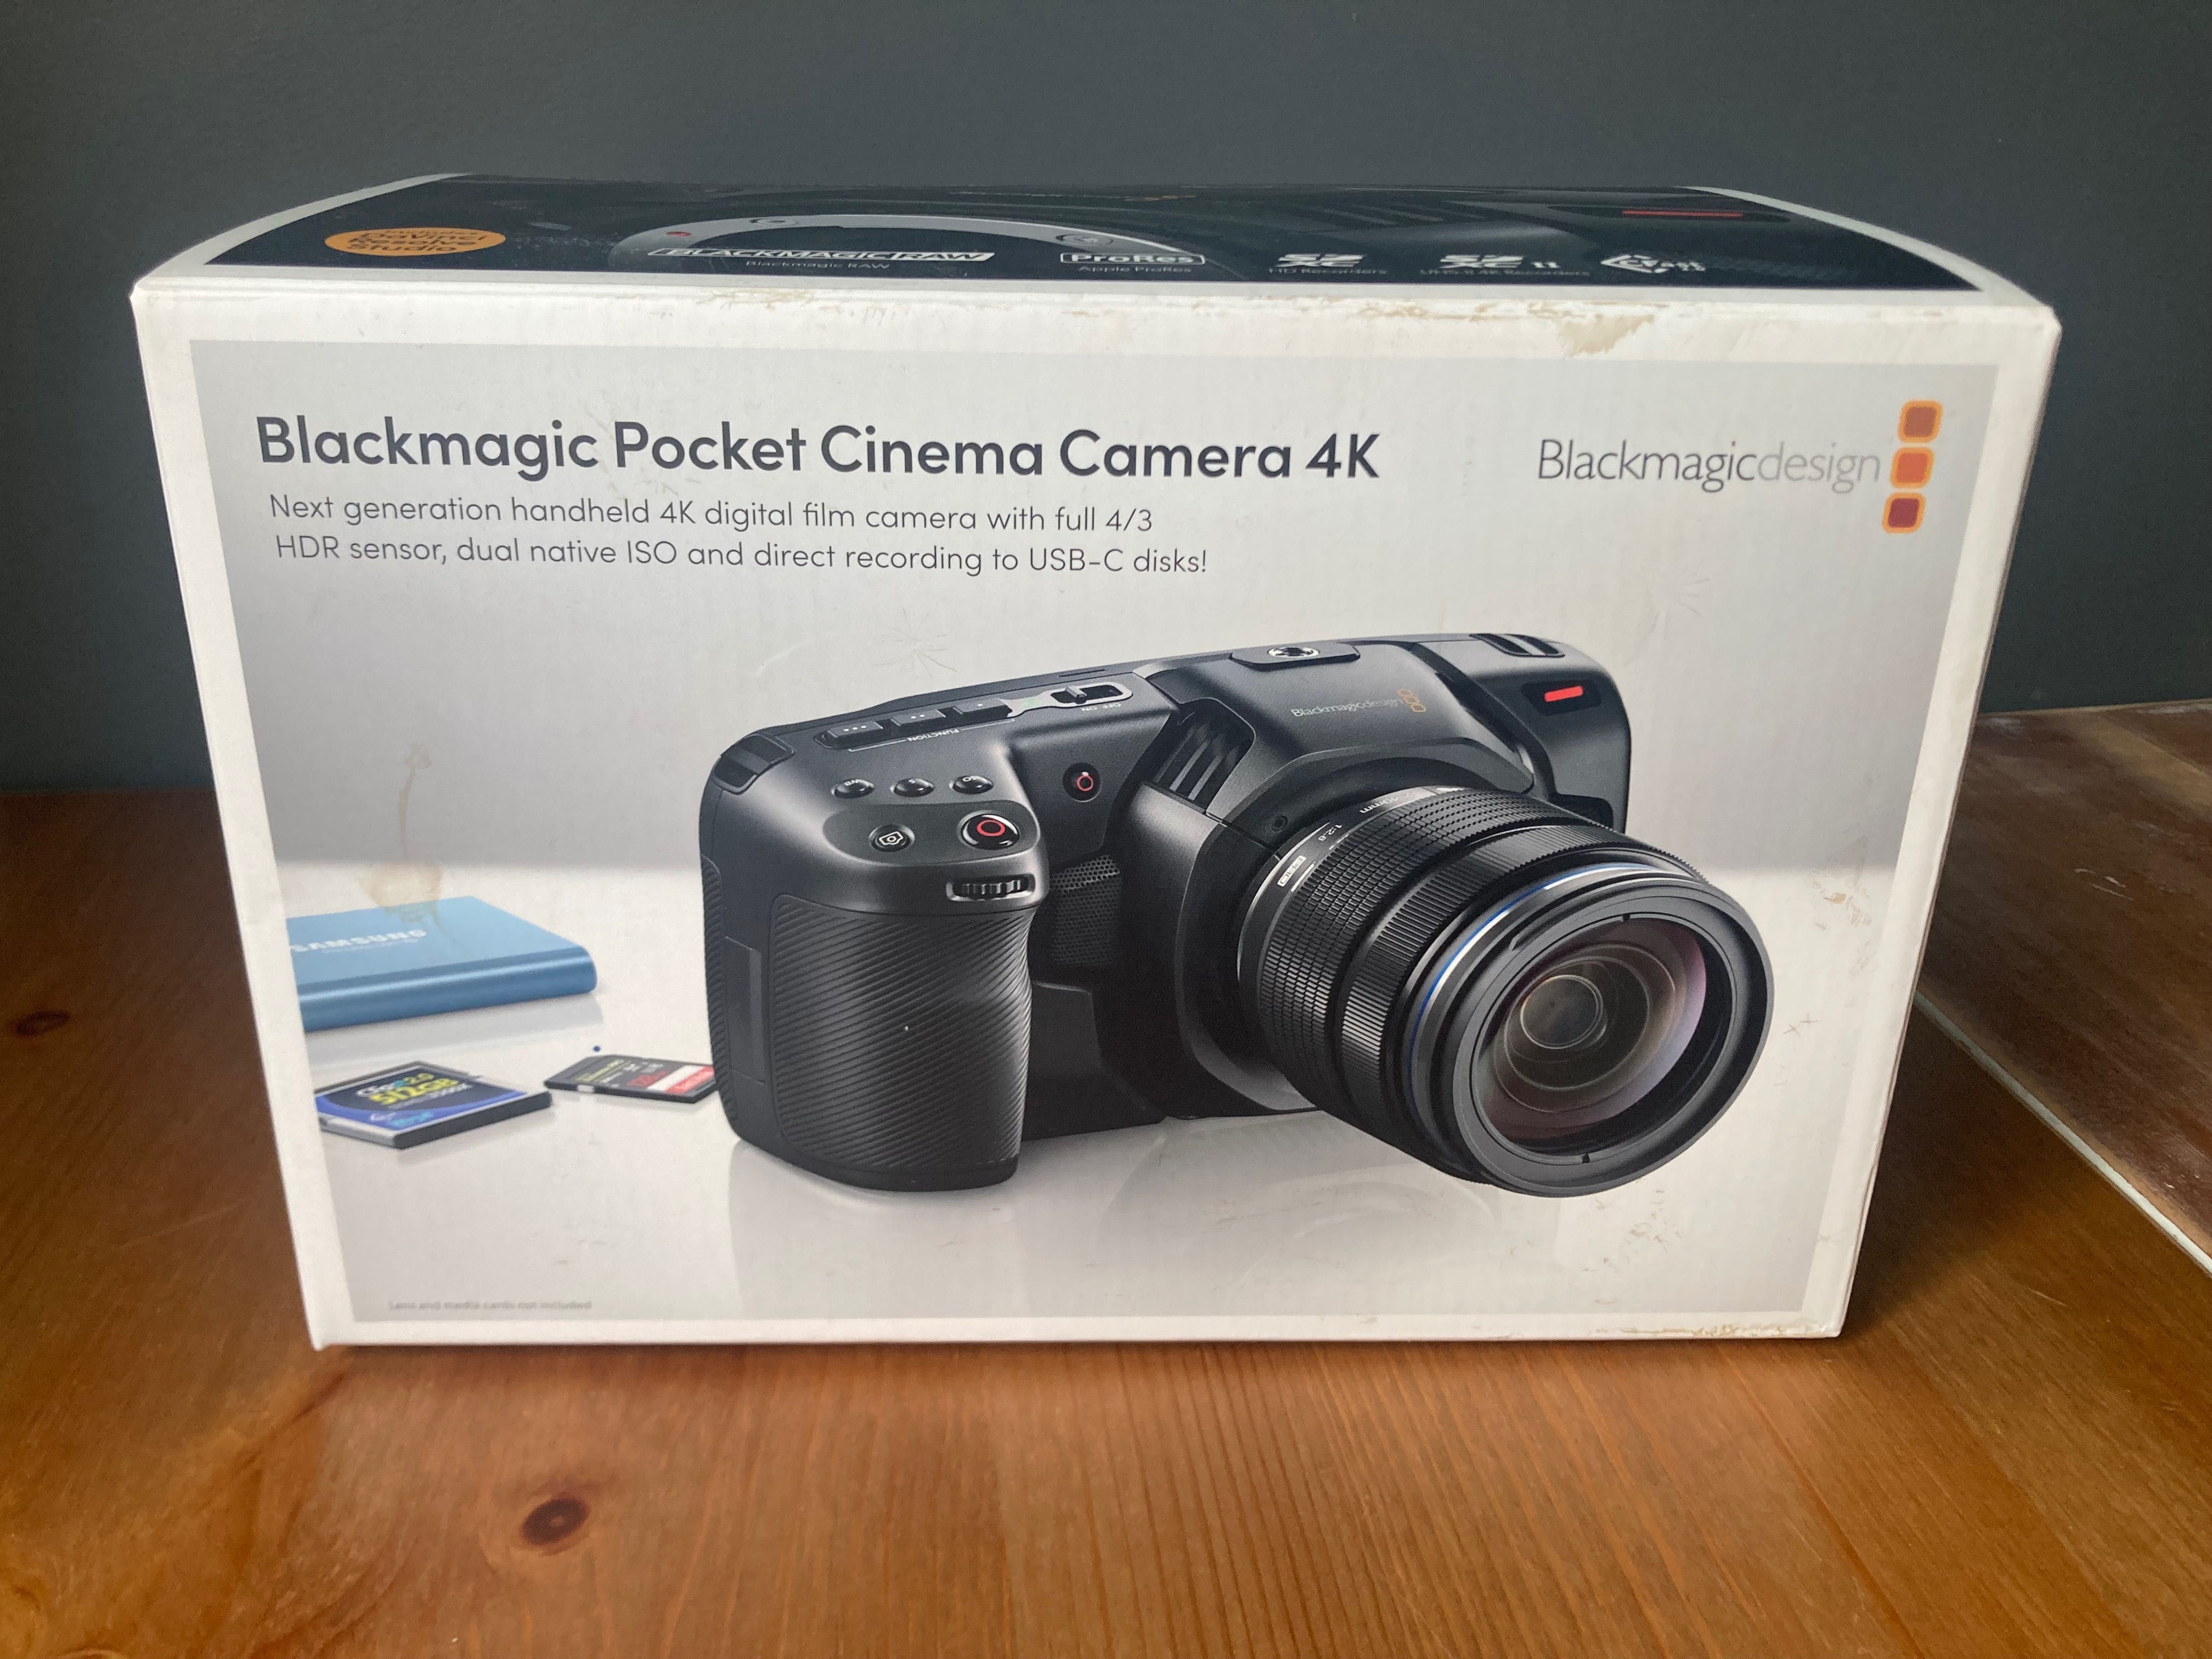 Kamera cyfrowa Blackmagic Pocket Cinema Camera 4K